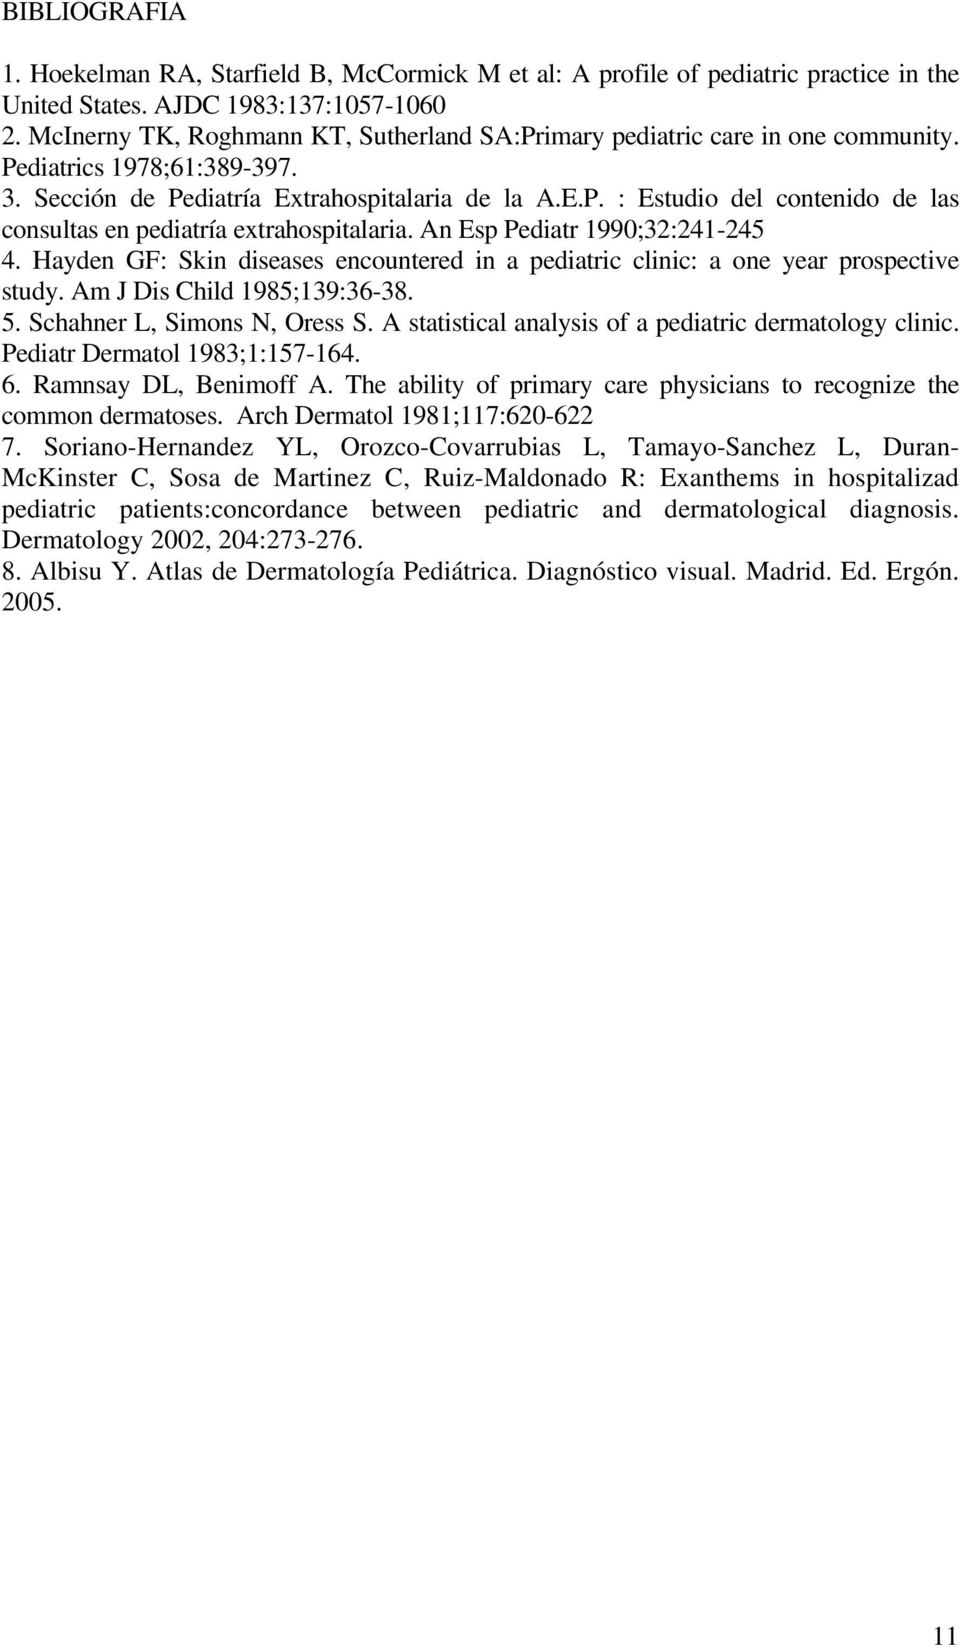 An Esp Pediatr 1990;32:241-245 4. Hayden GF: Skin diseases encountered in a pediatric clinic: a one year prospective study. Am J Dis Child 1985;139:36-38. 5. Schahner L, Simons N, Oress S.